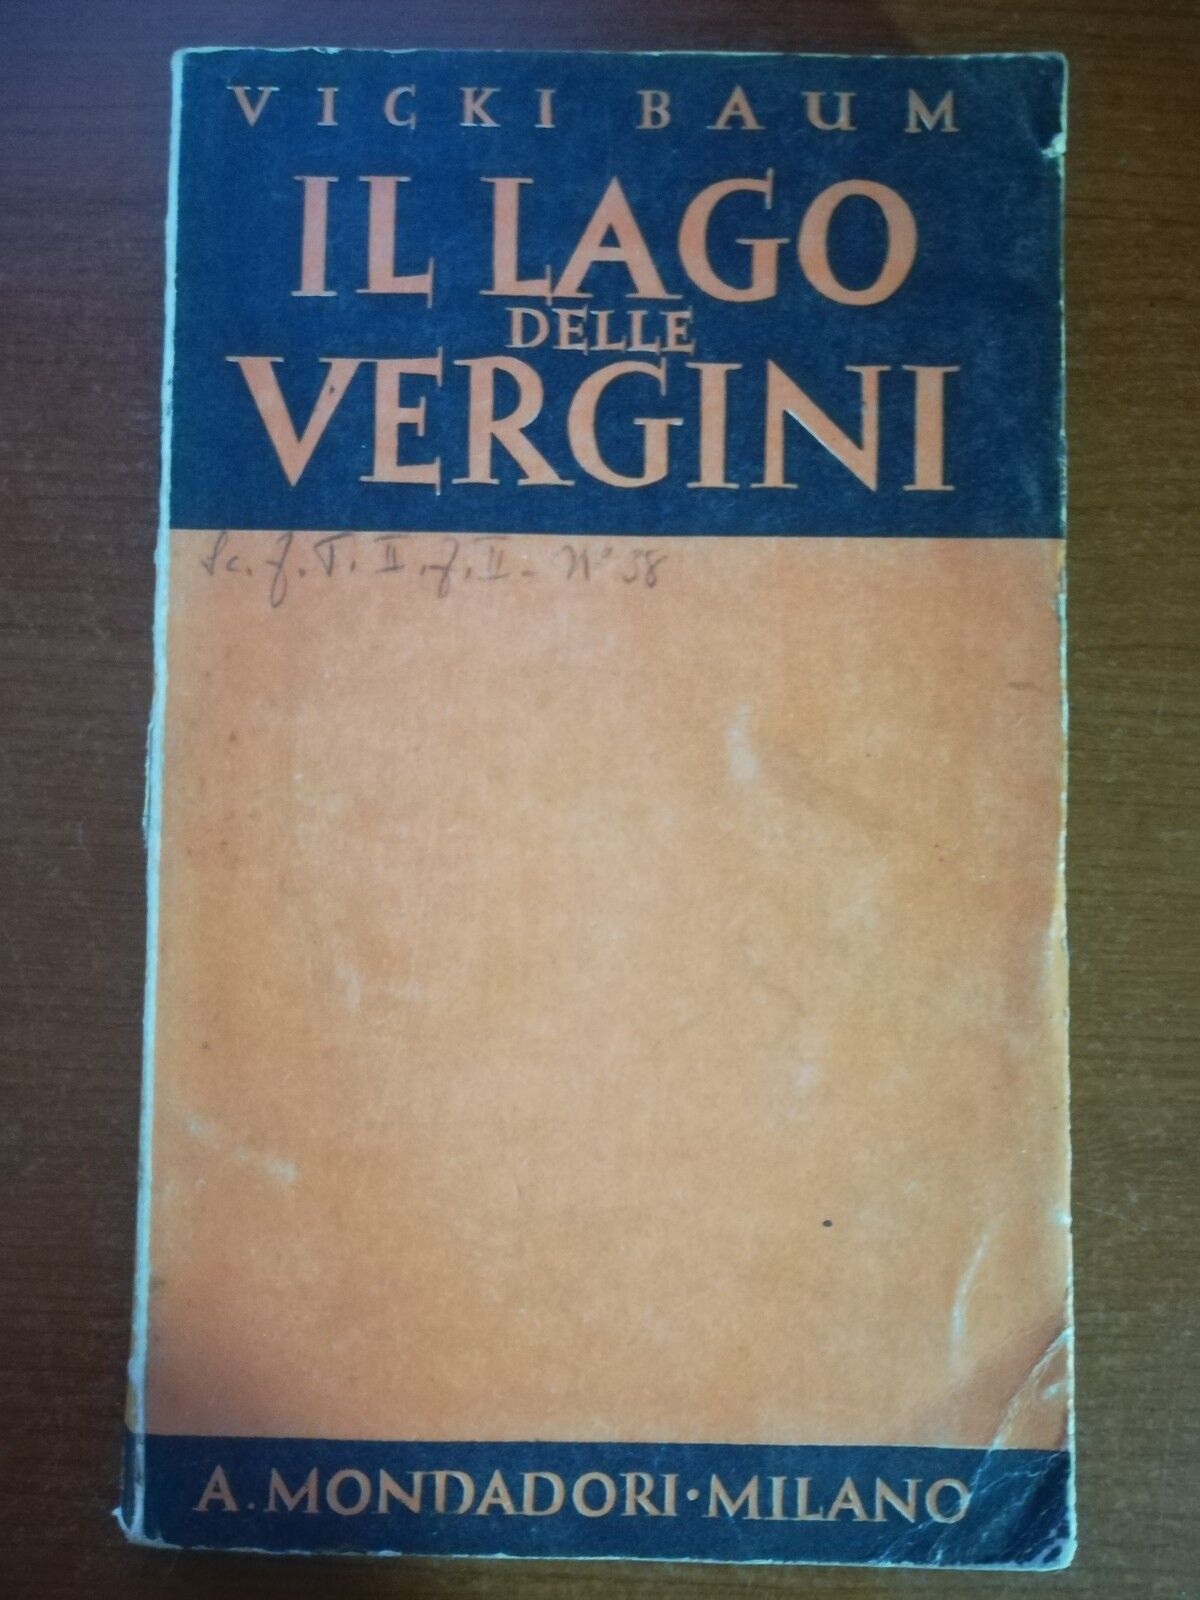 Il lago delle vergini - Vicki Baum - Mondadori - 1937 - M